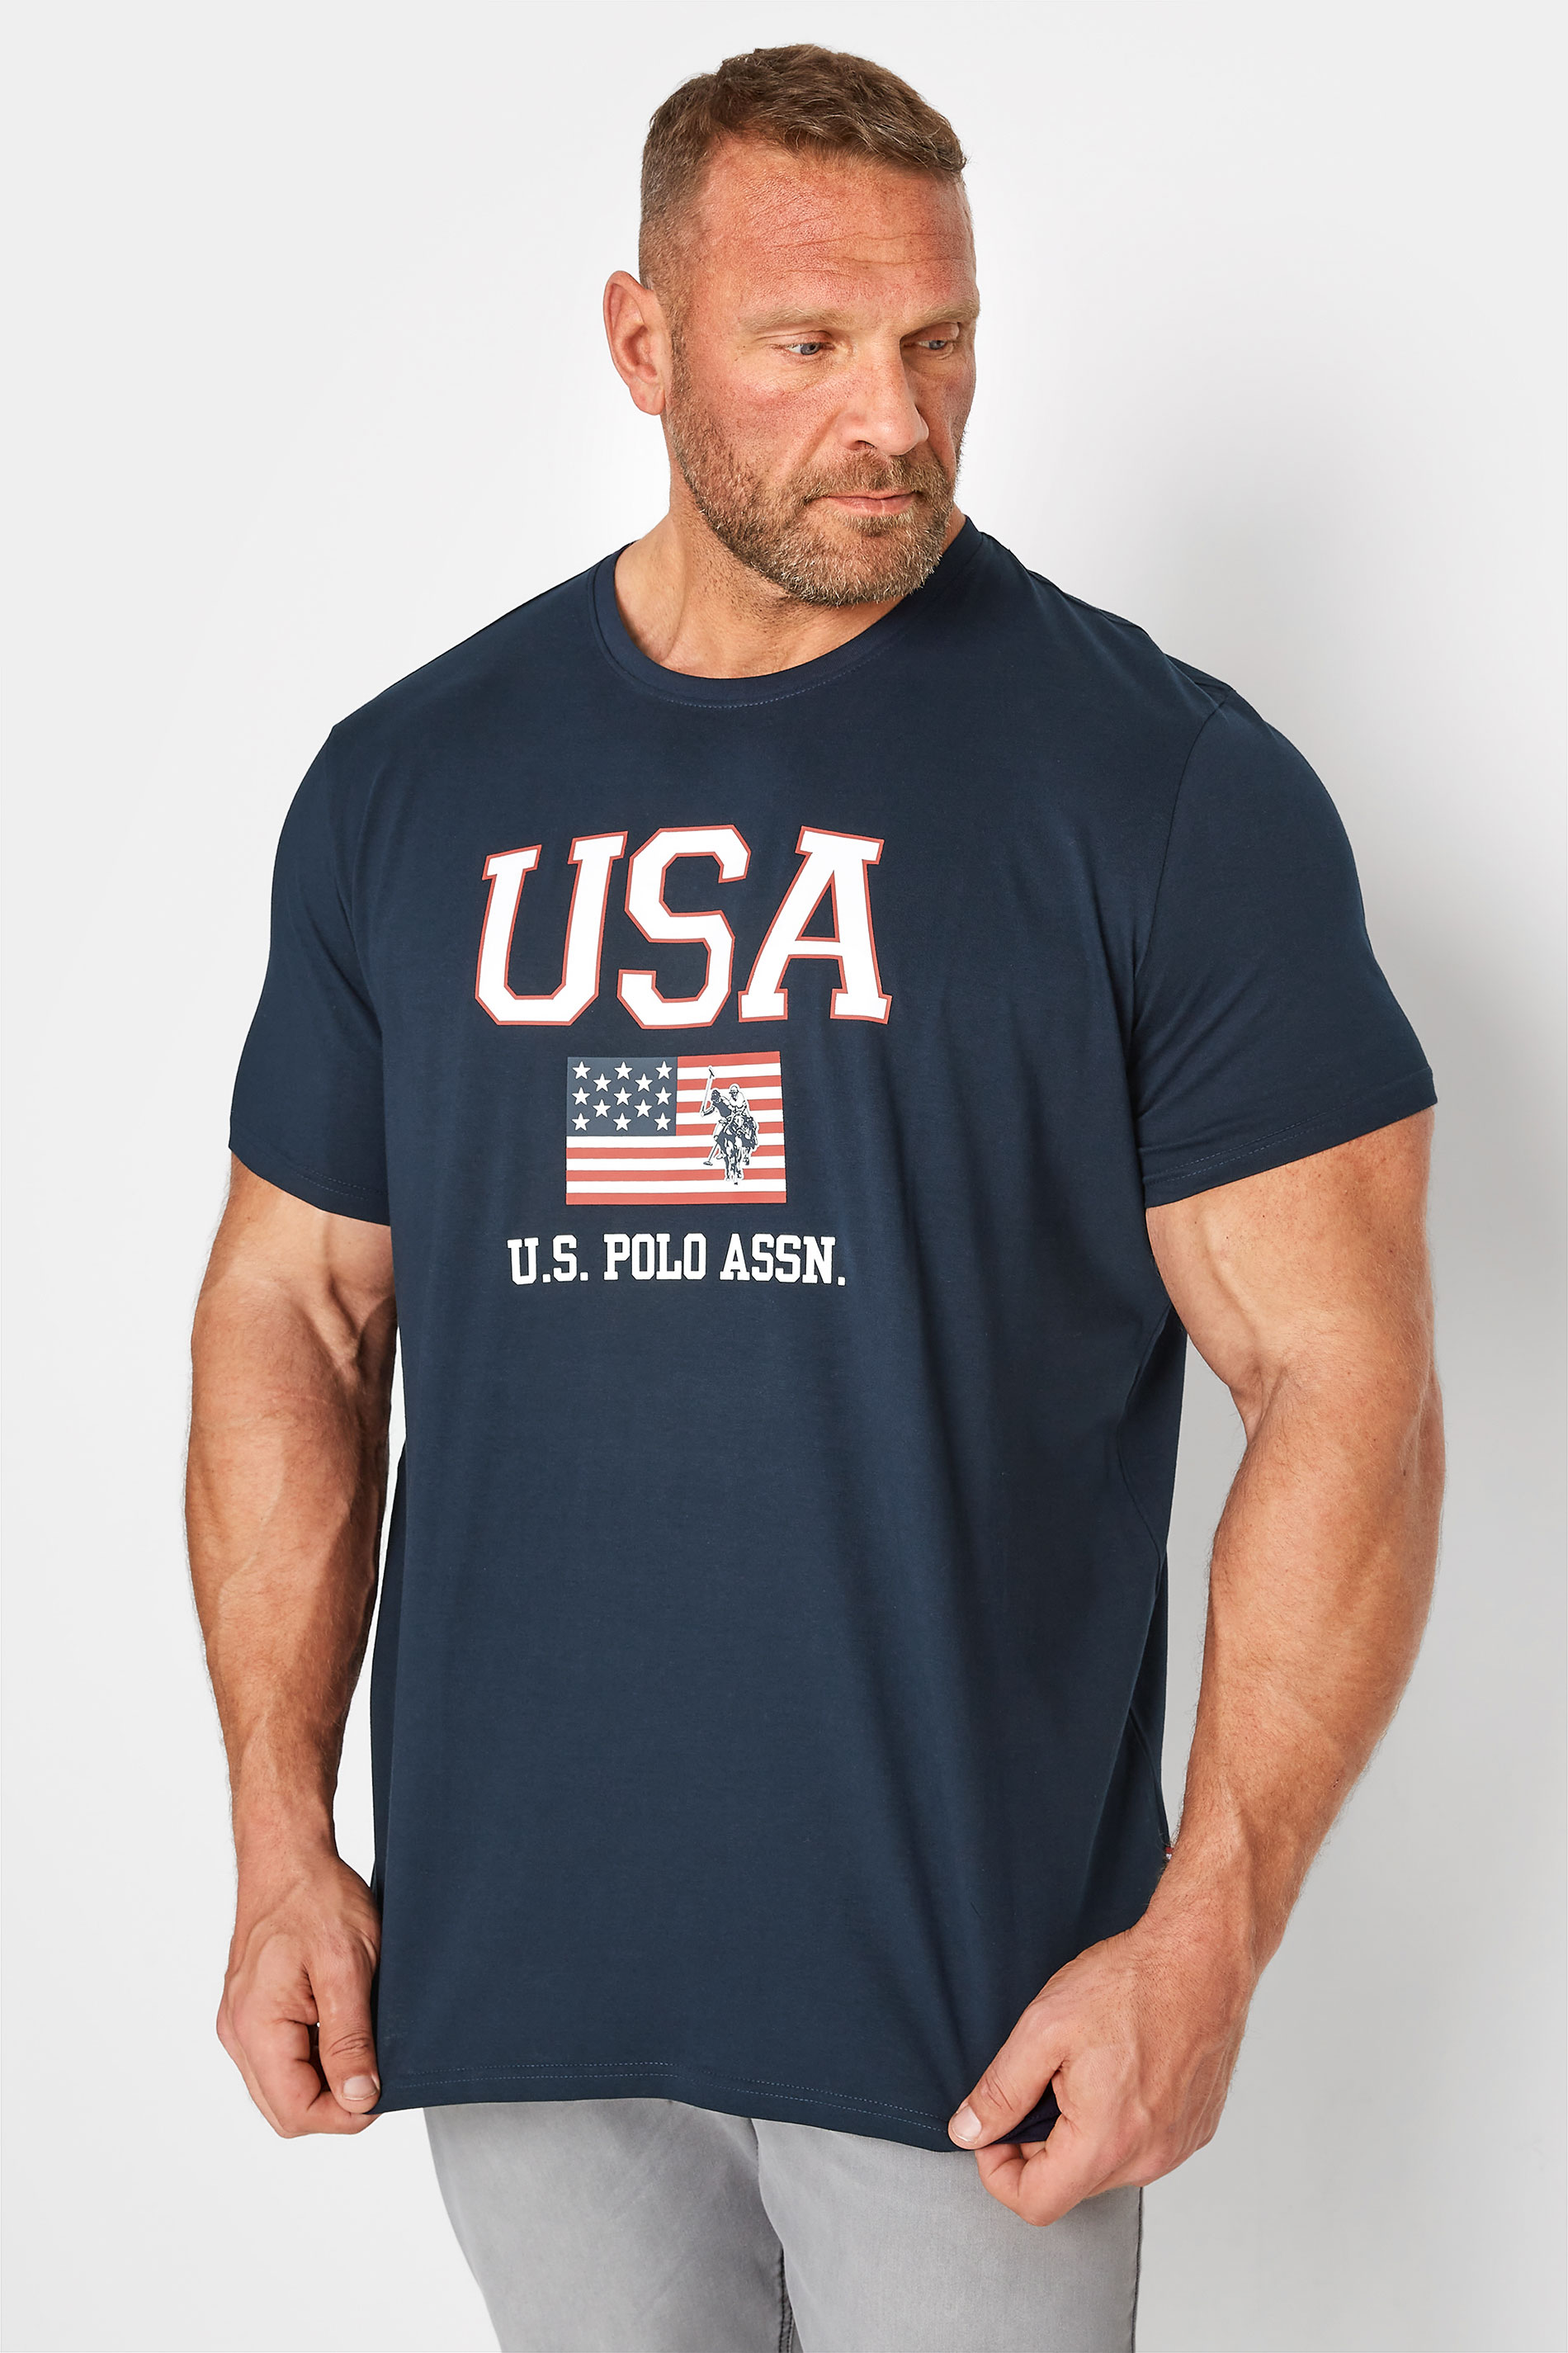 U.S. POLO ASSN. Navy Blue USA Print T-Shirt | BadRhino 1